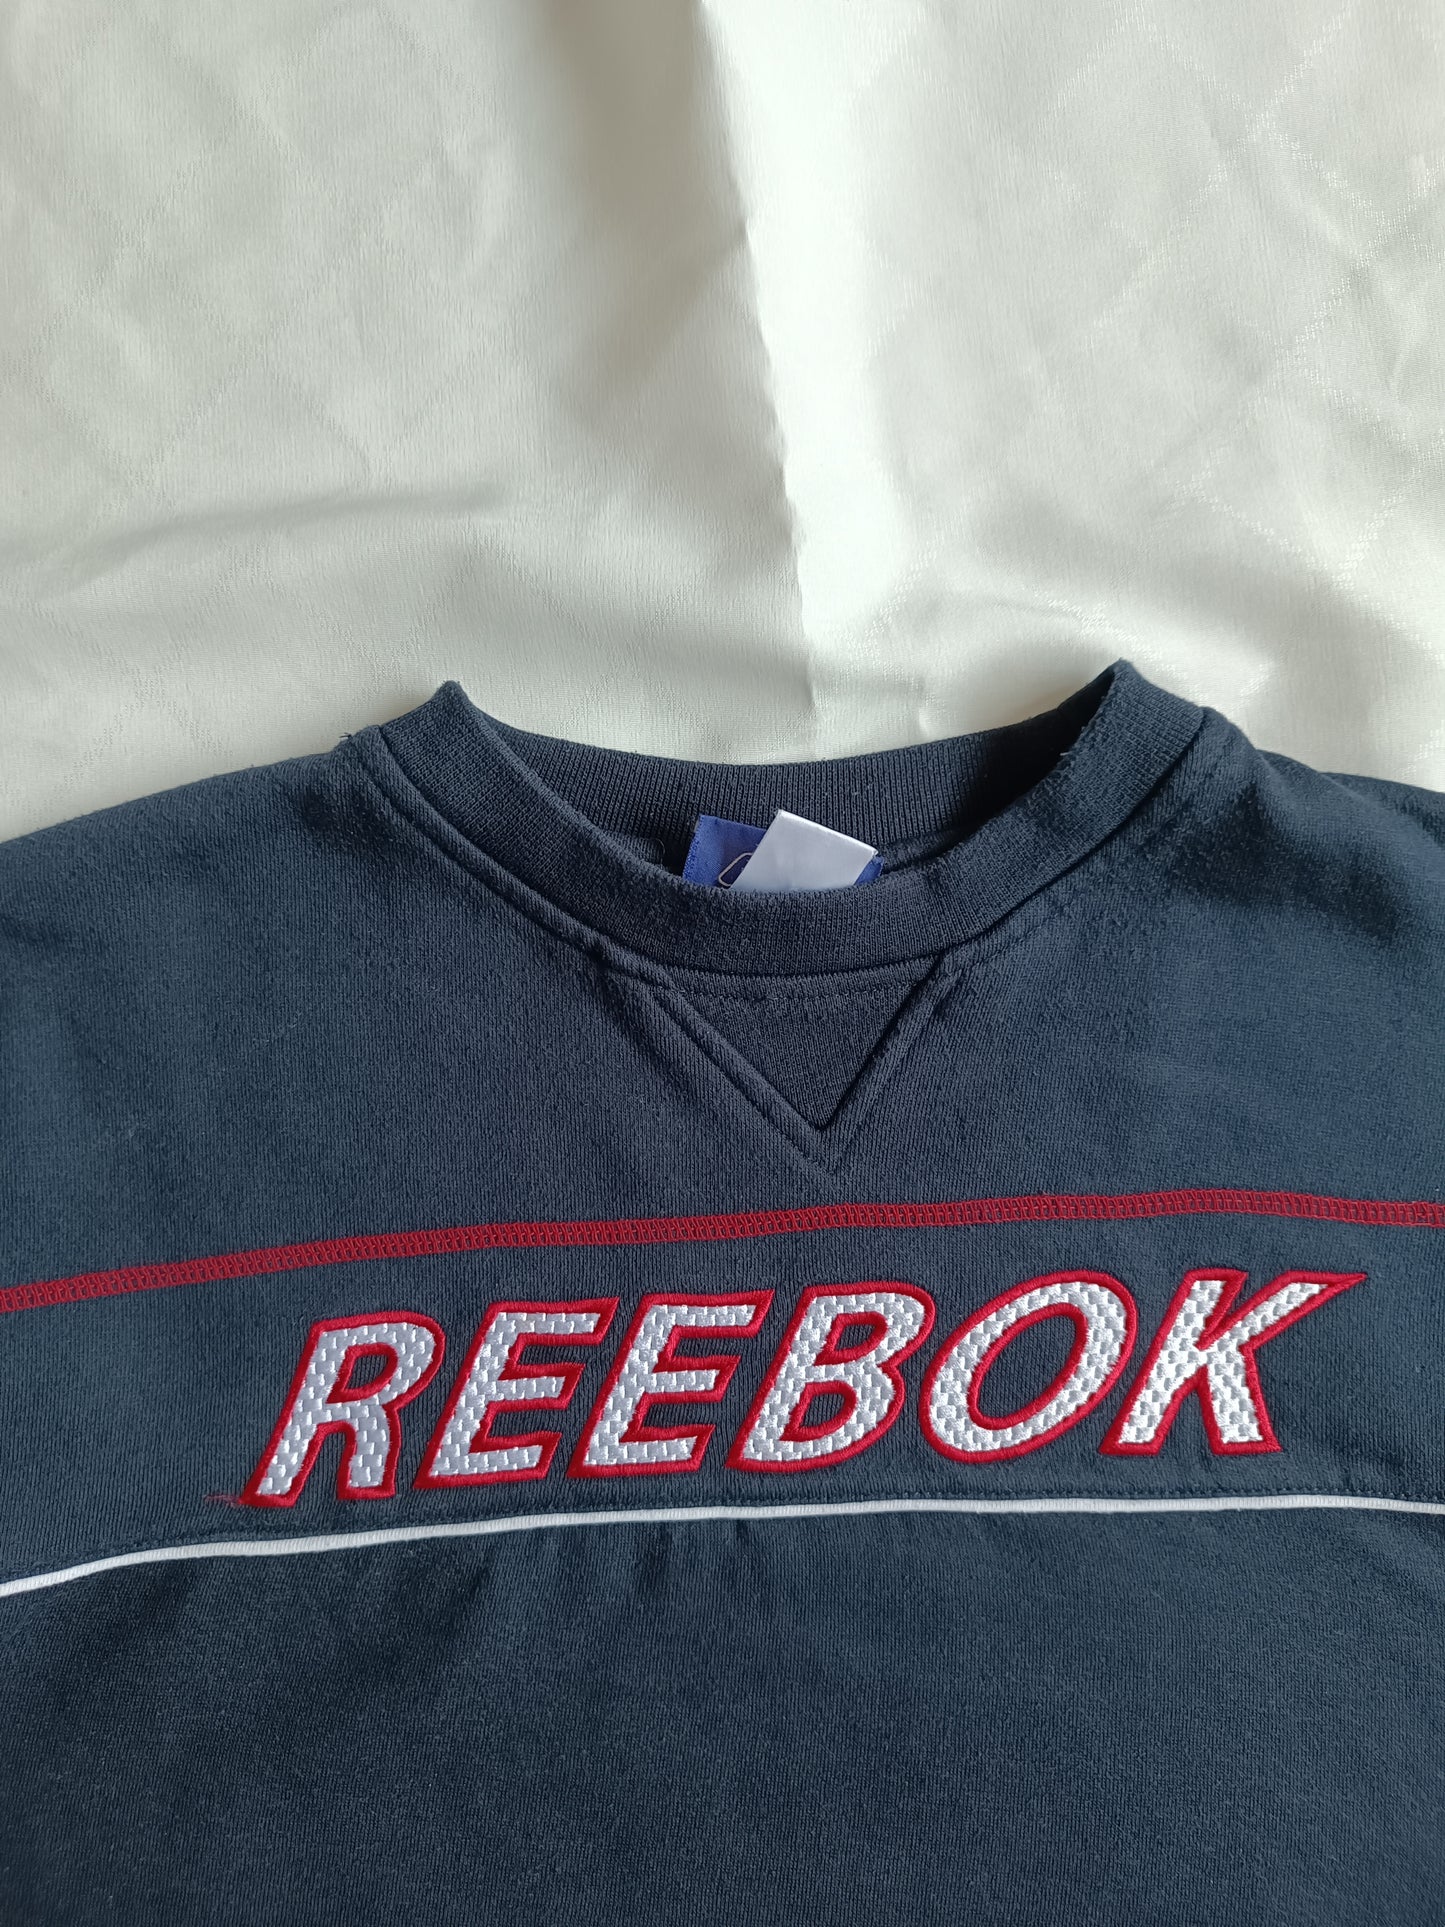 Reebok Sweater - M